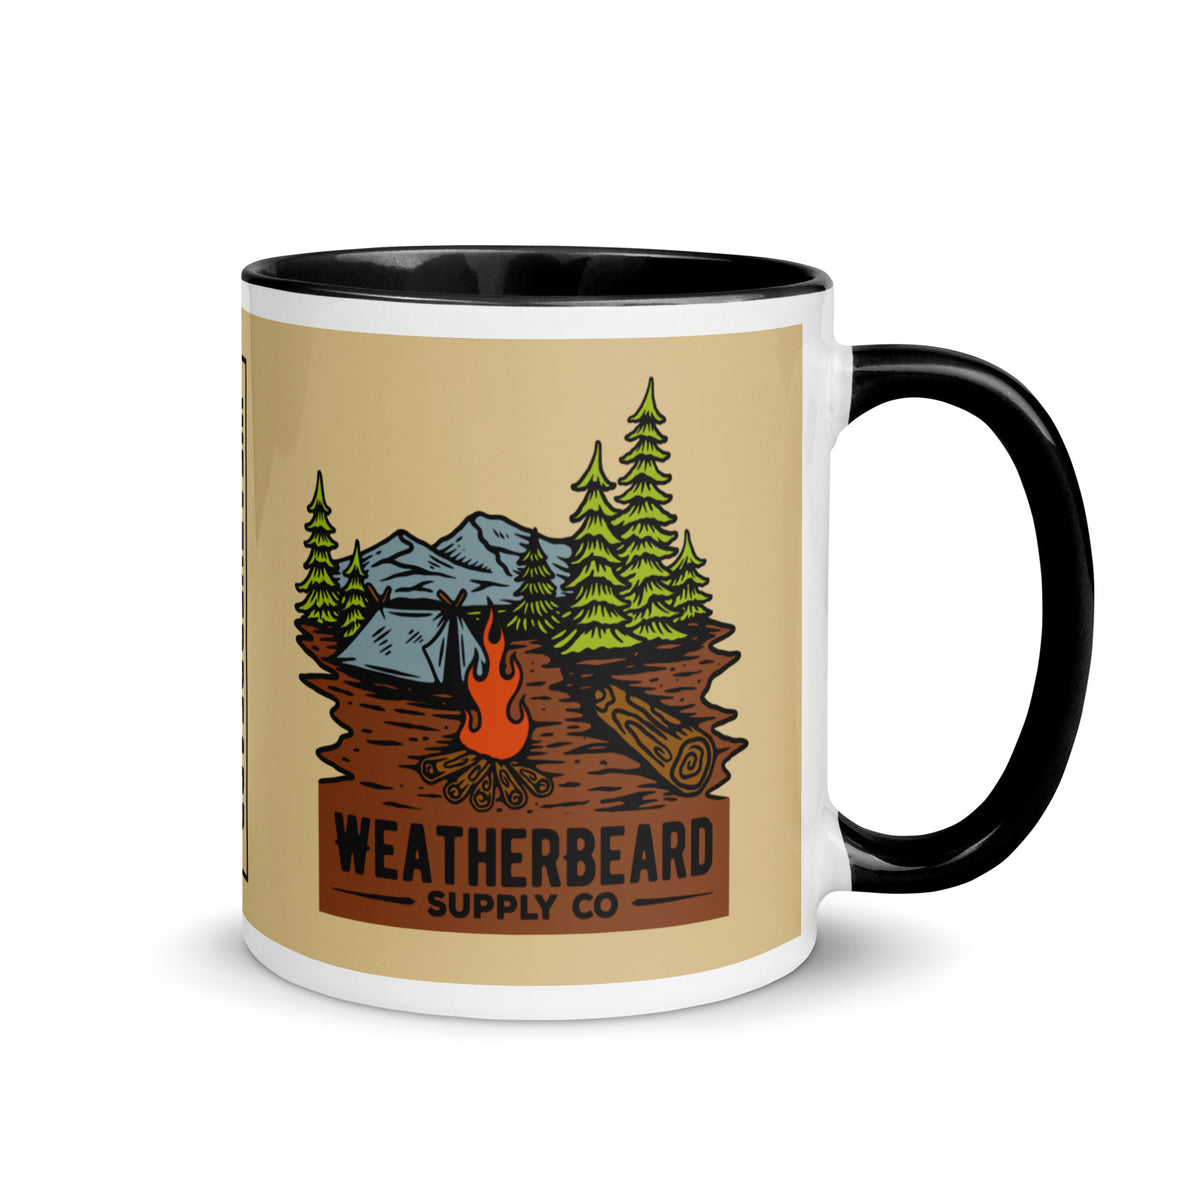 Weatherbeard Campfire Mug